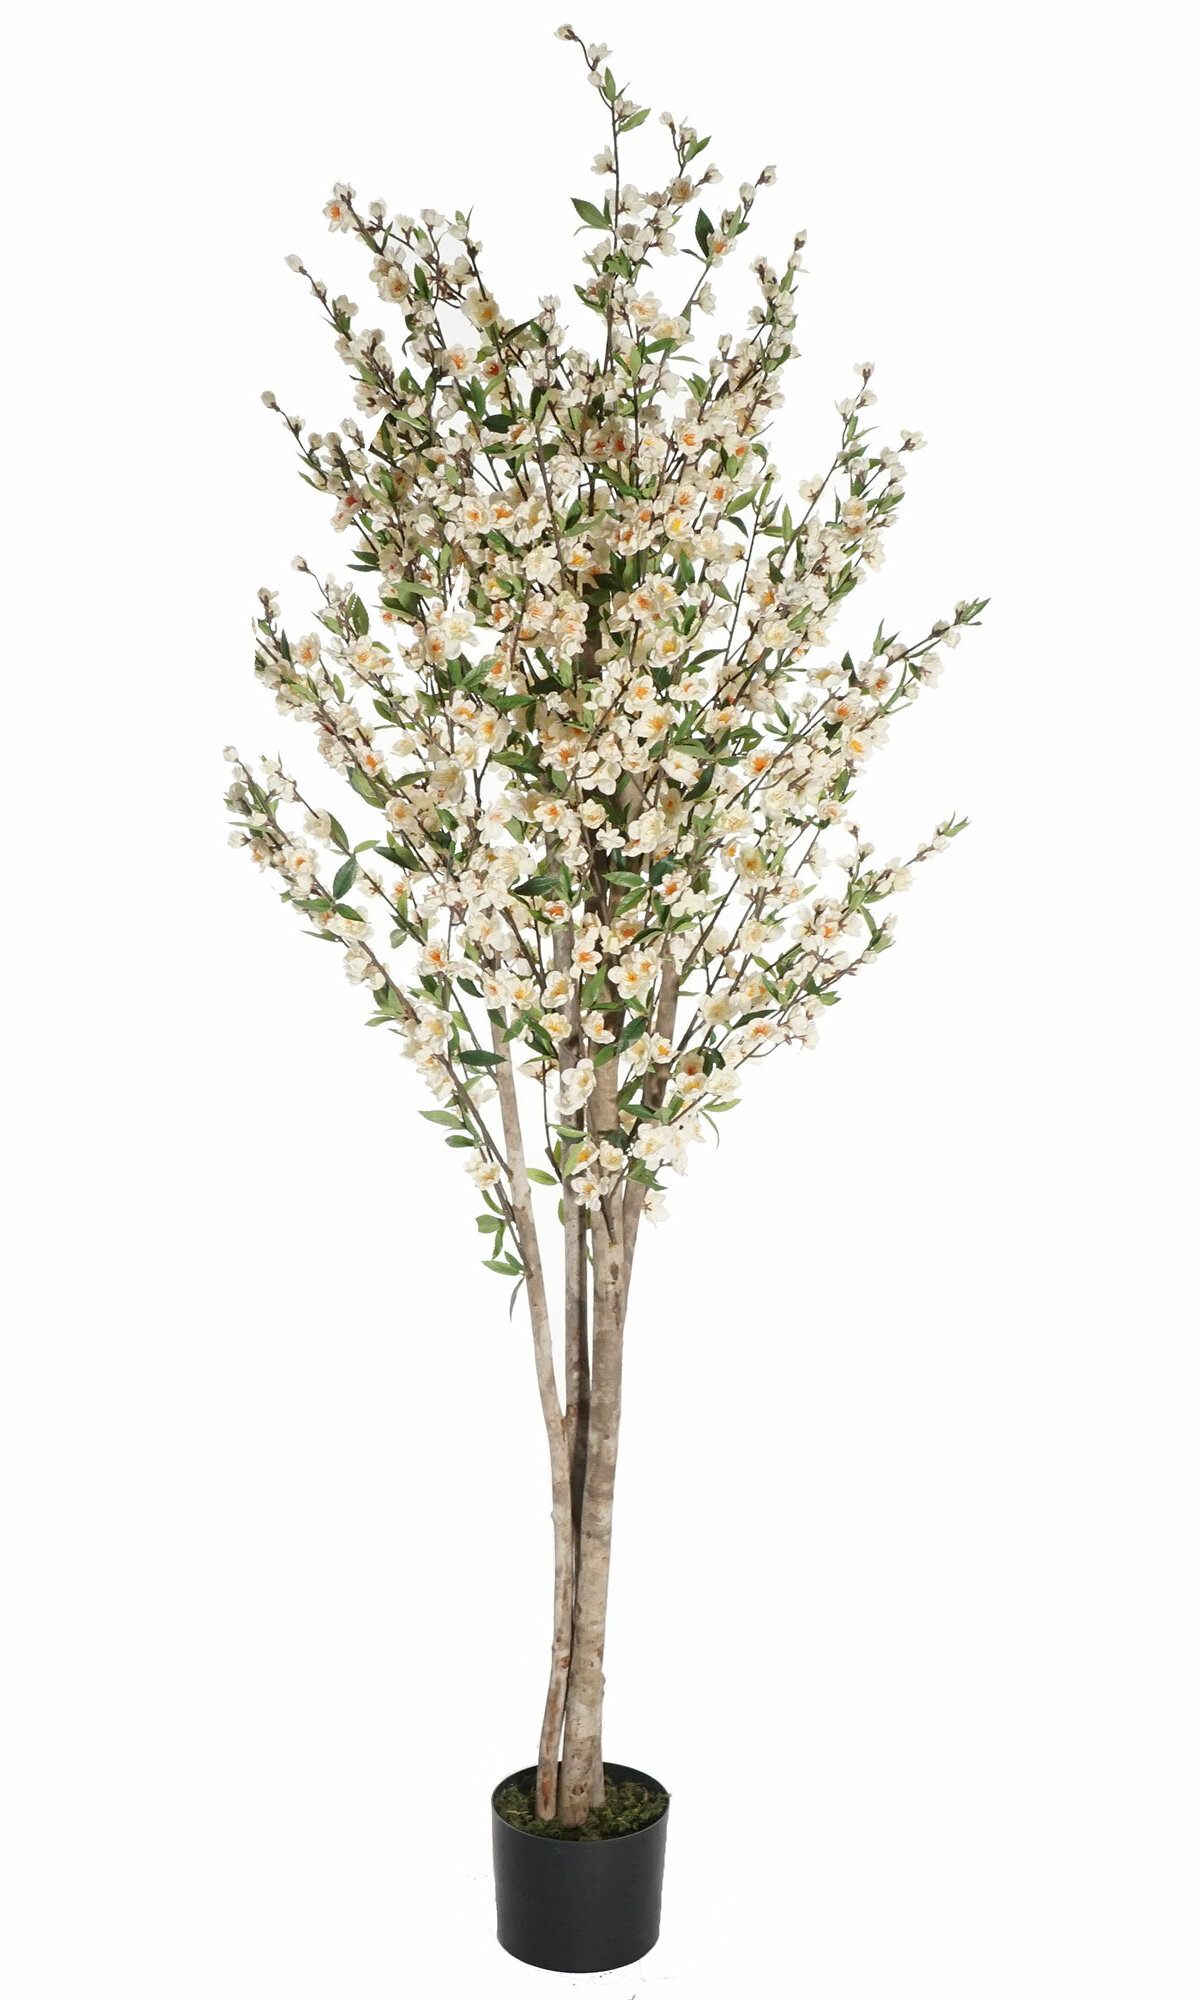 Gracie Oaks 6' Cherry Blossom Tree in Pot & Reviews | Wayfair